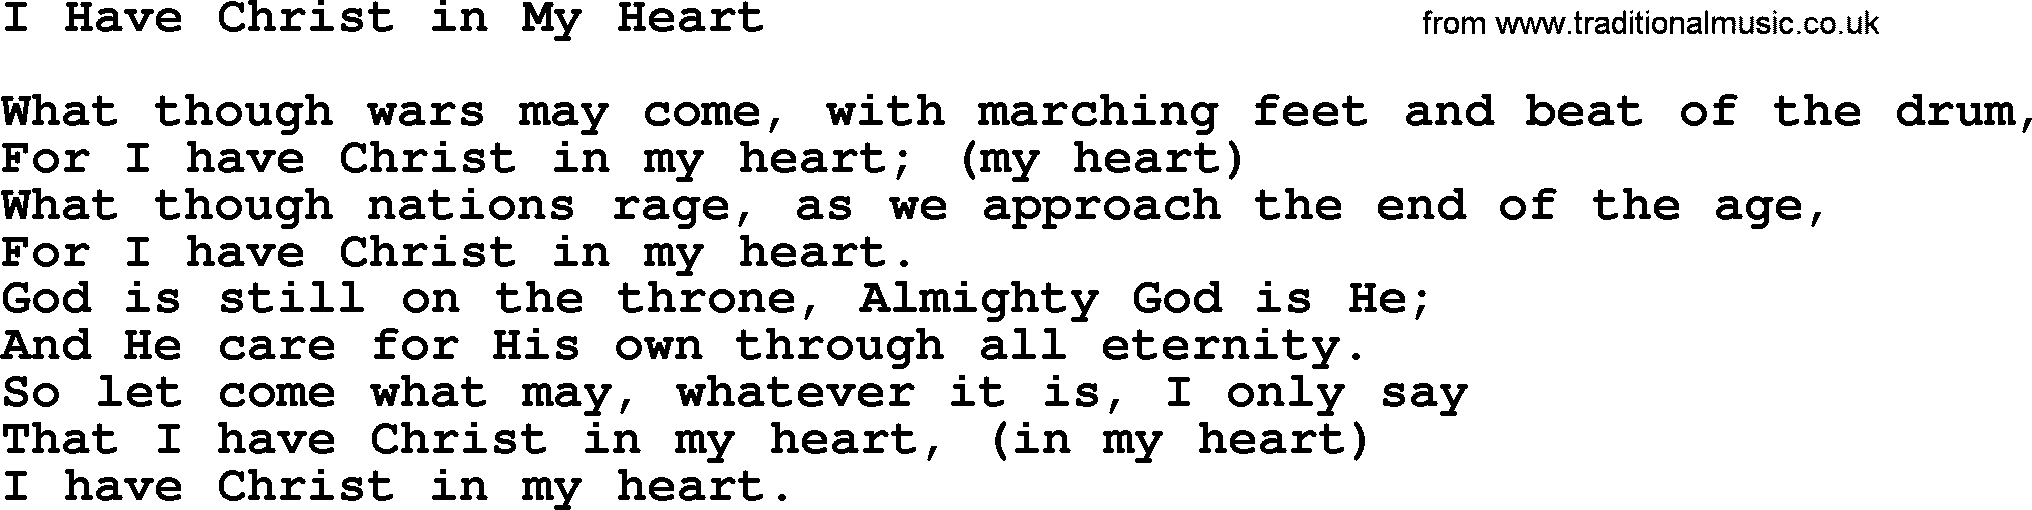 Baptist Hymnal Hymn: I Have Christ In My Heart, lyrics with pdf